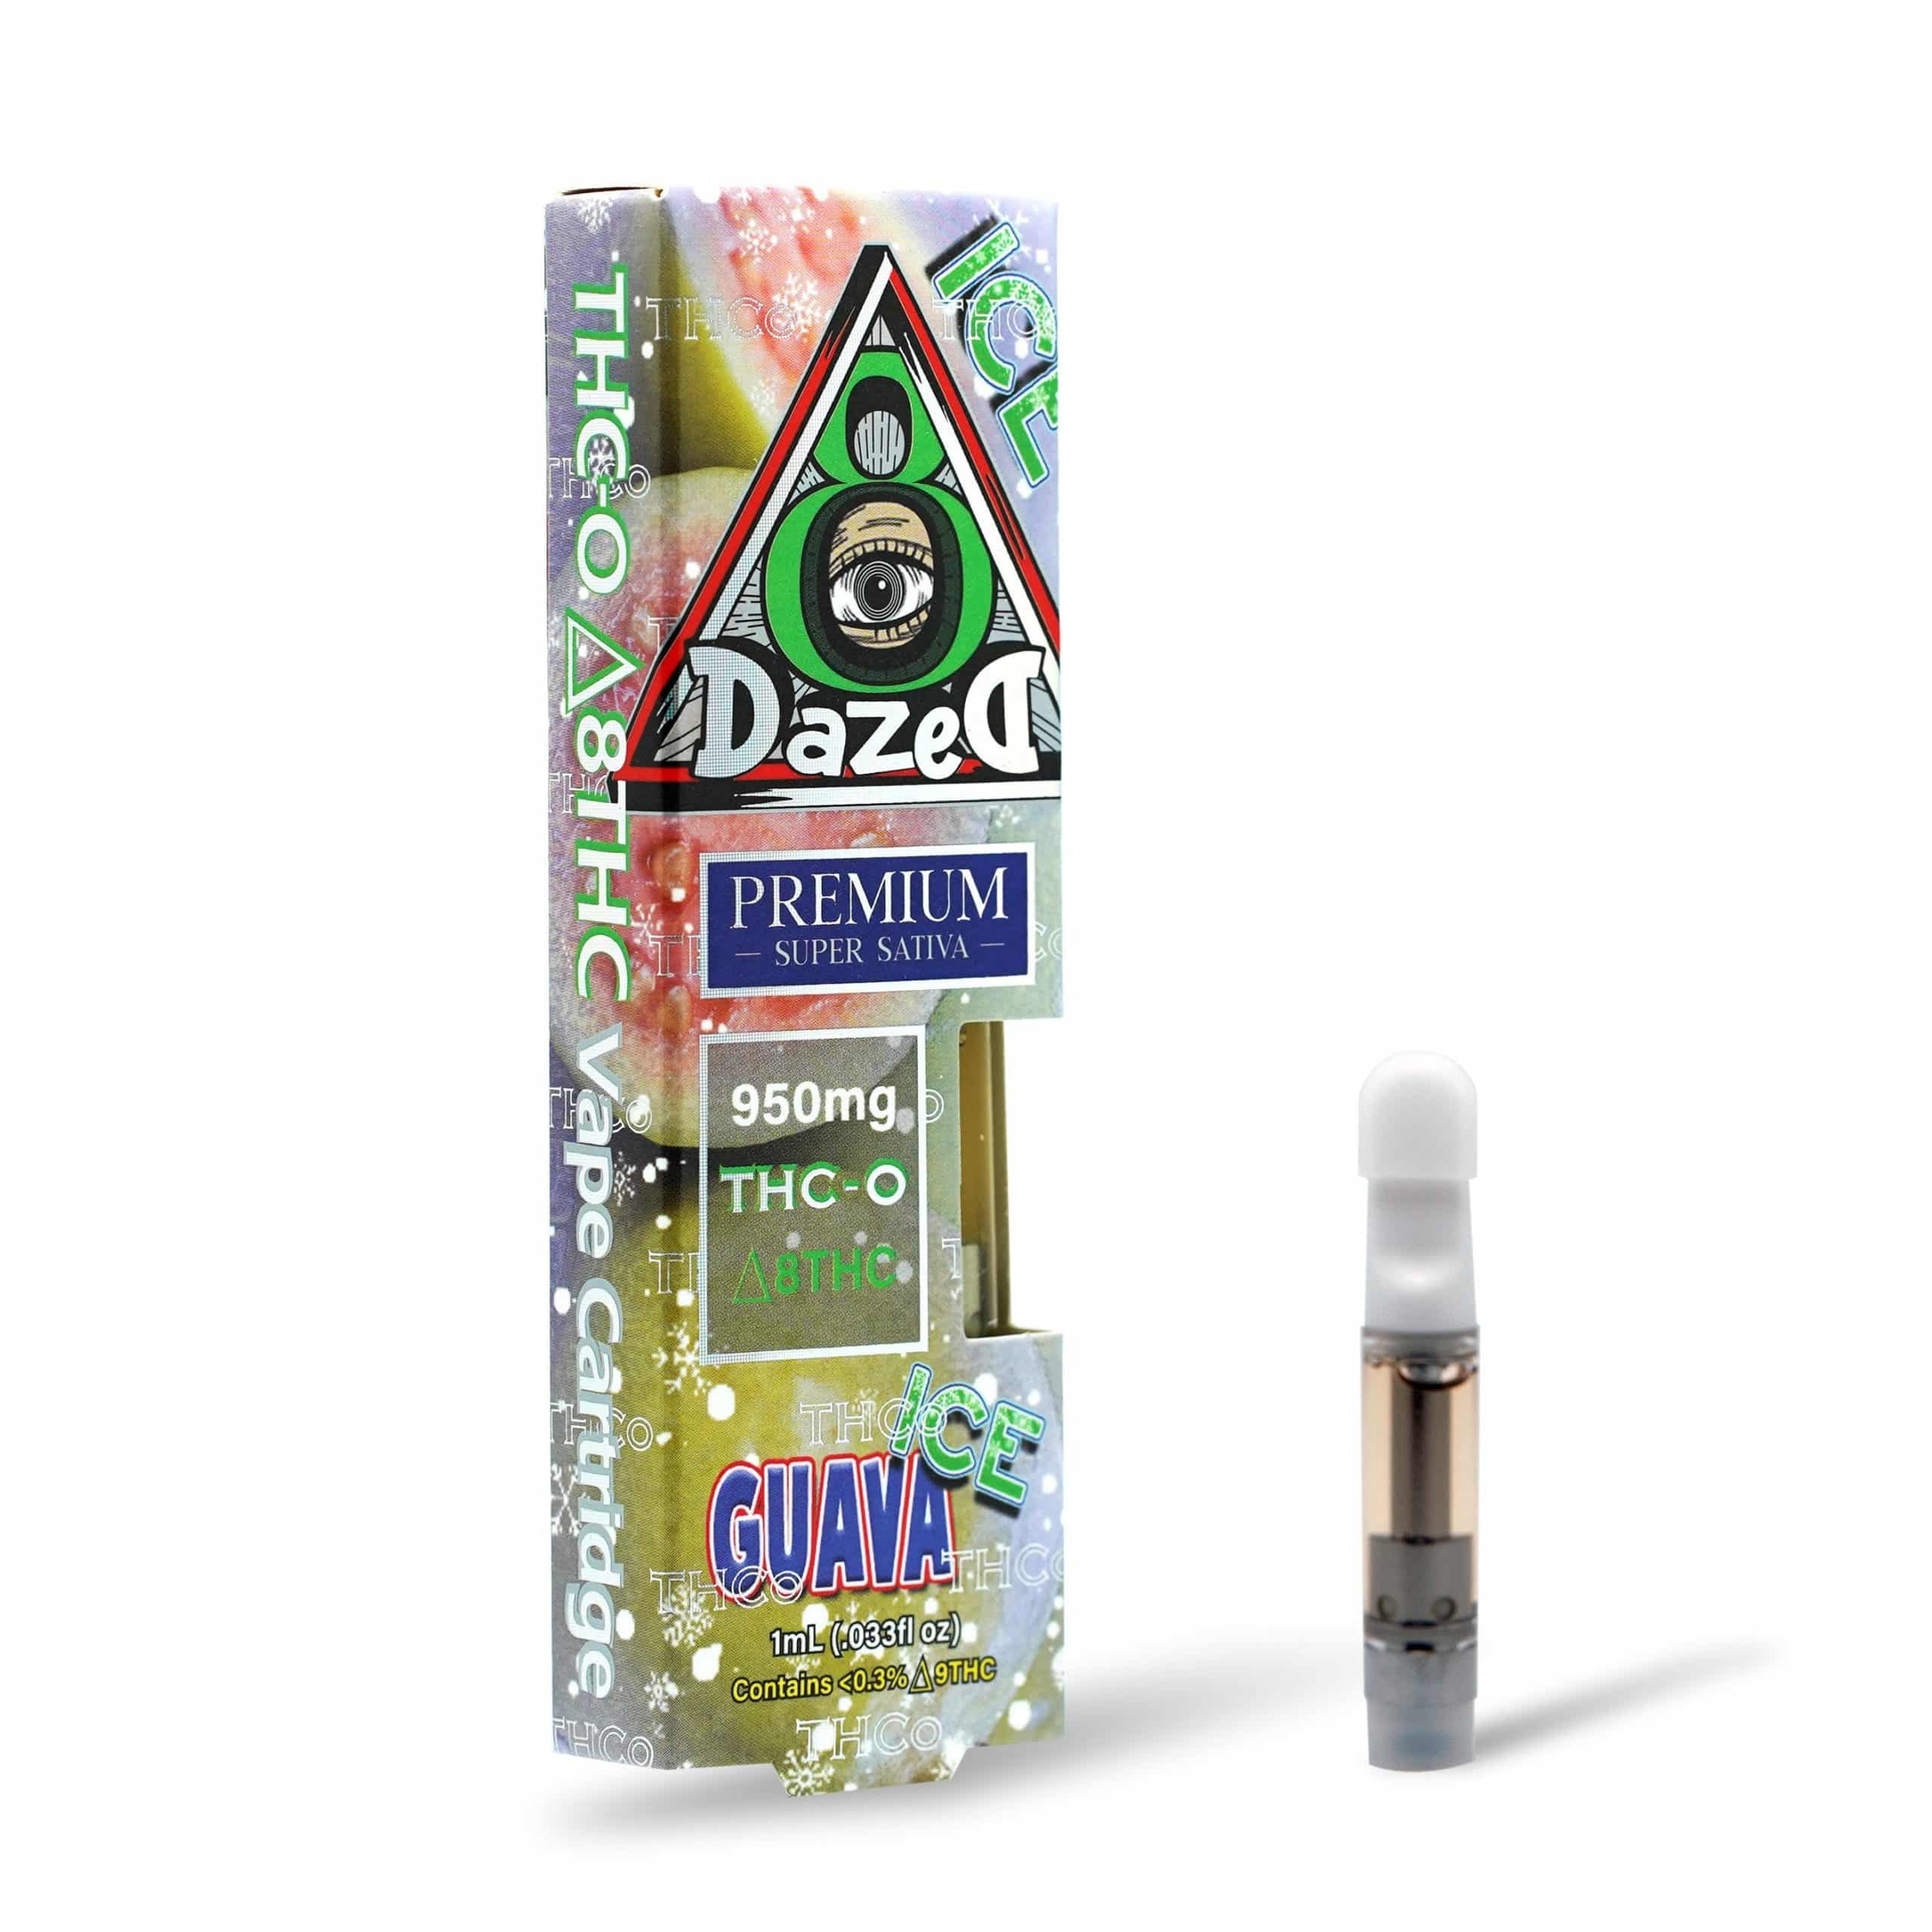 DazeD8 Guava Ice Delta 8 THC-O Cartridge (1g) Best Price